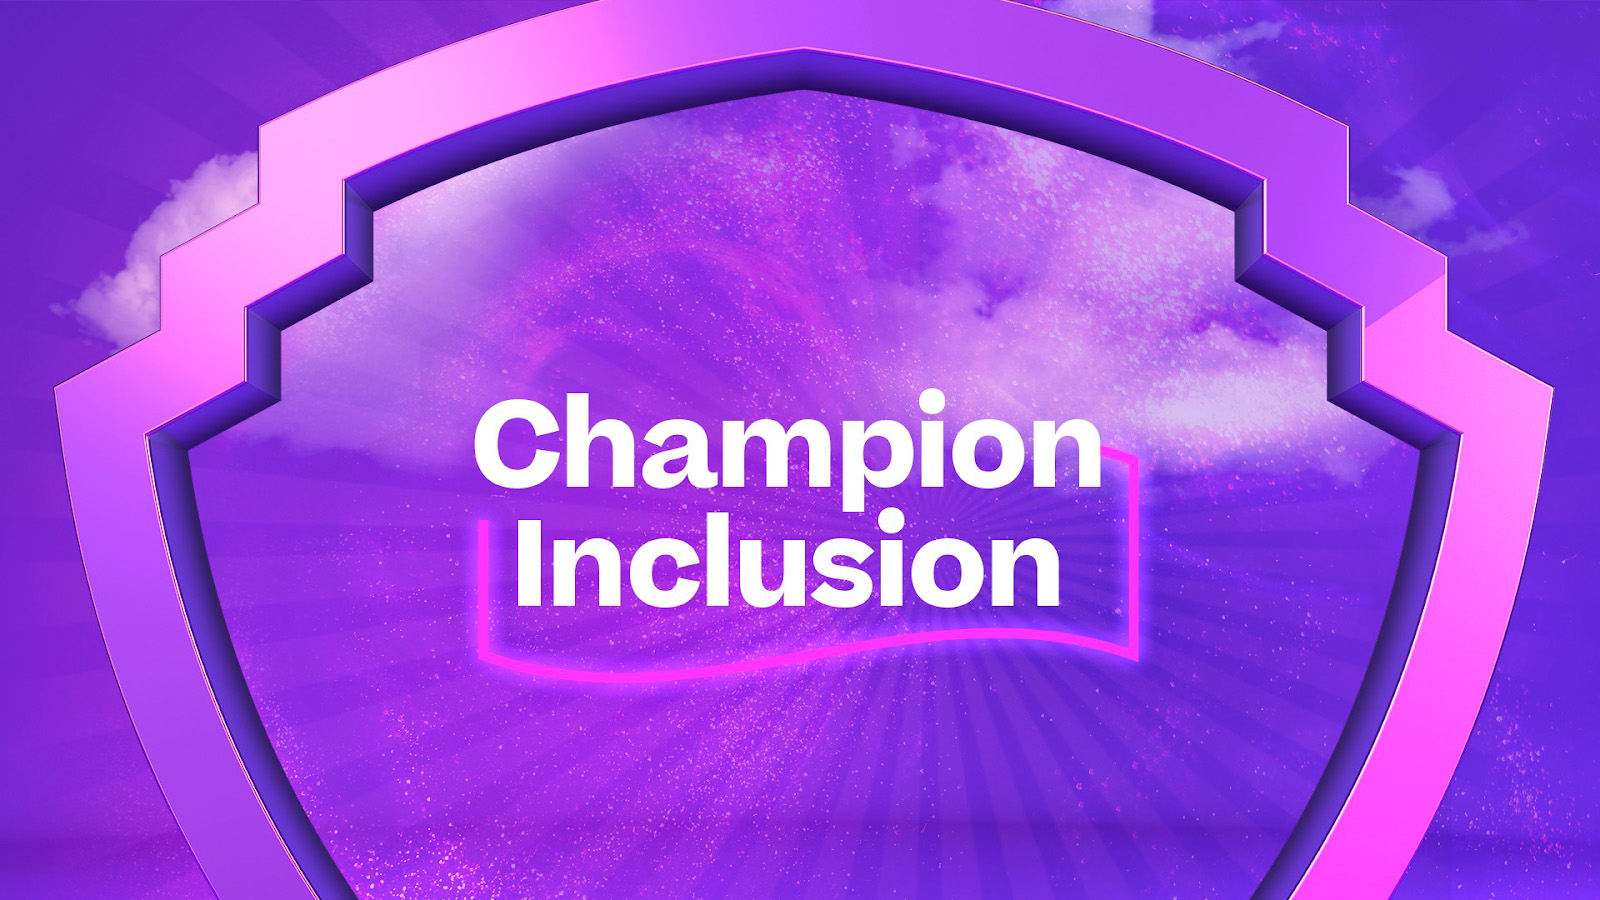 Graphic reading "Champion Inclusion"